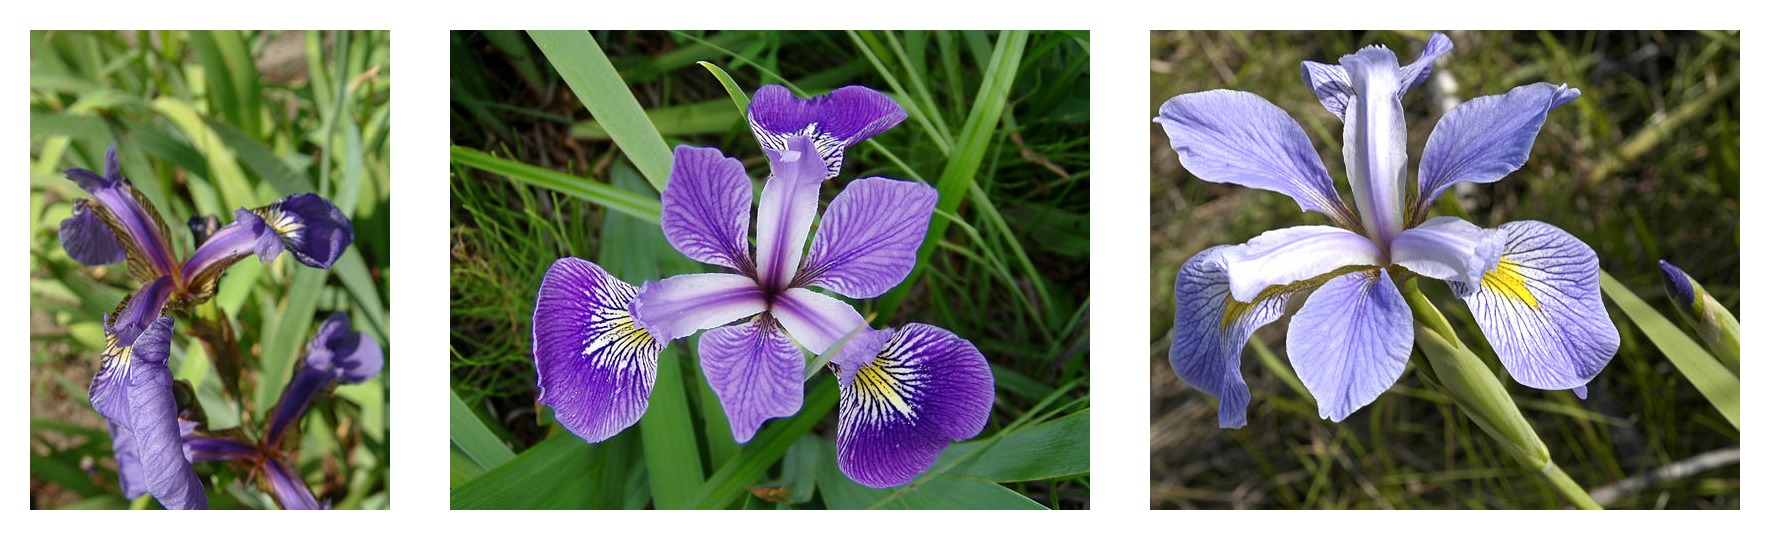 Geometri kelopak dibandingkan untuk tiga spesies iris: Iris setosa, Iris virginica, dan Iris versicolor